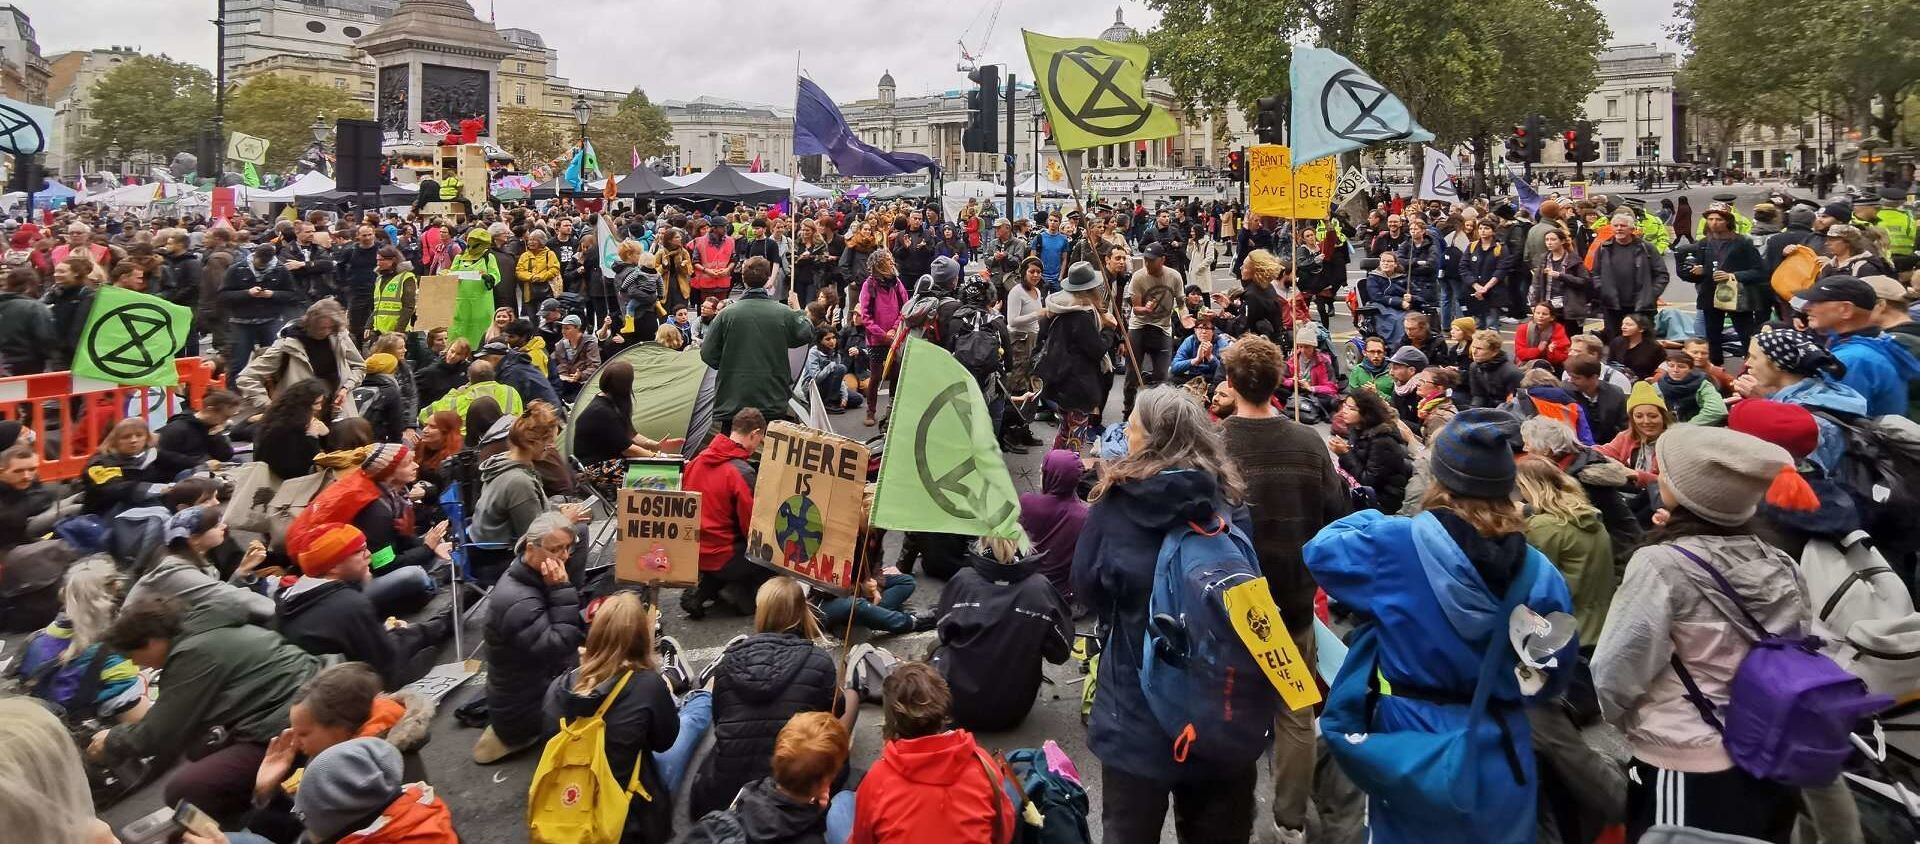 Extinction Rebellion activists block a major thruway to obstruct traffic during a major rally near Trafalgar Square in London, UK on Friday, 11 October 2019 - Sputnik International, 1920, 24.08.2021